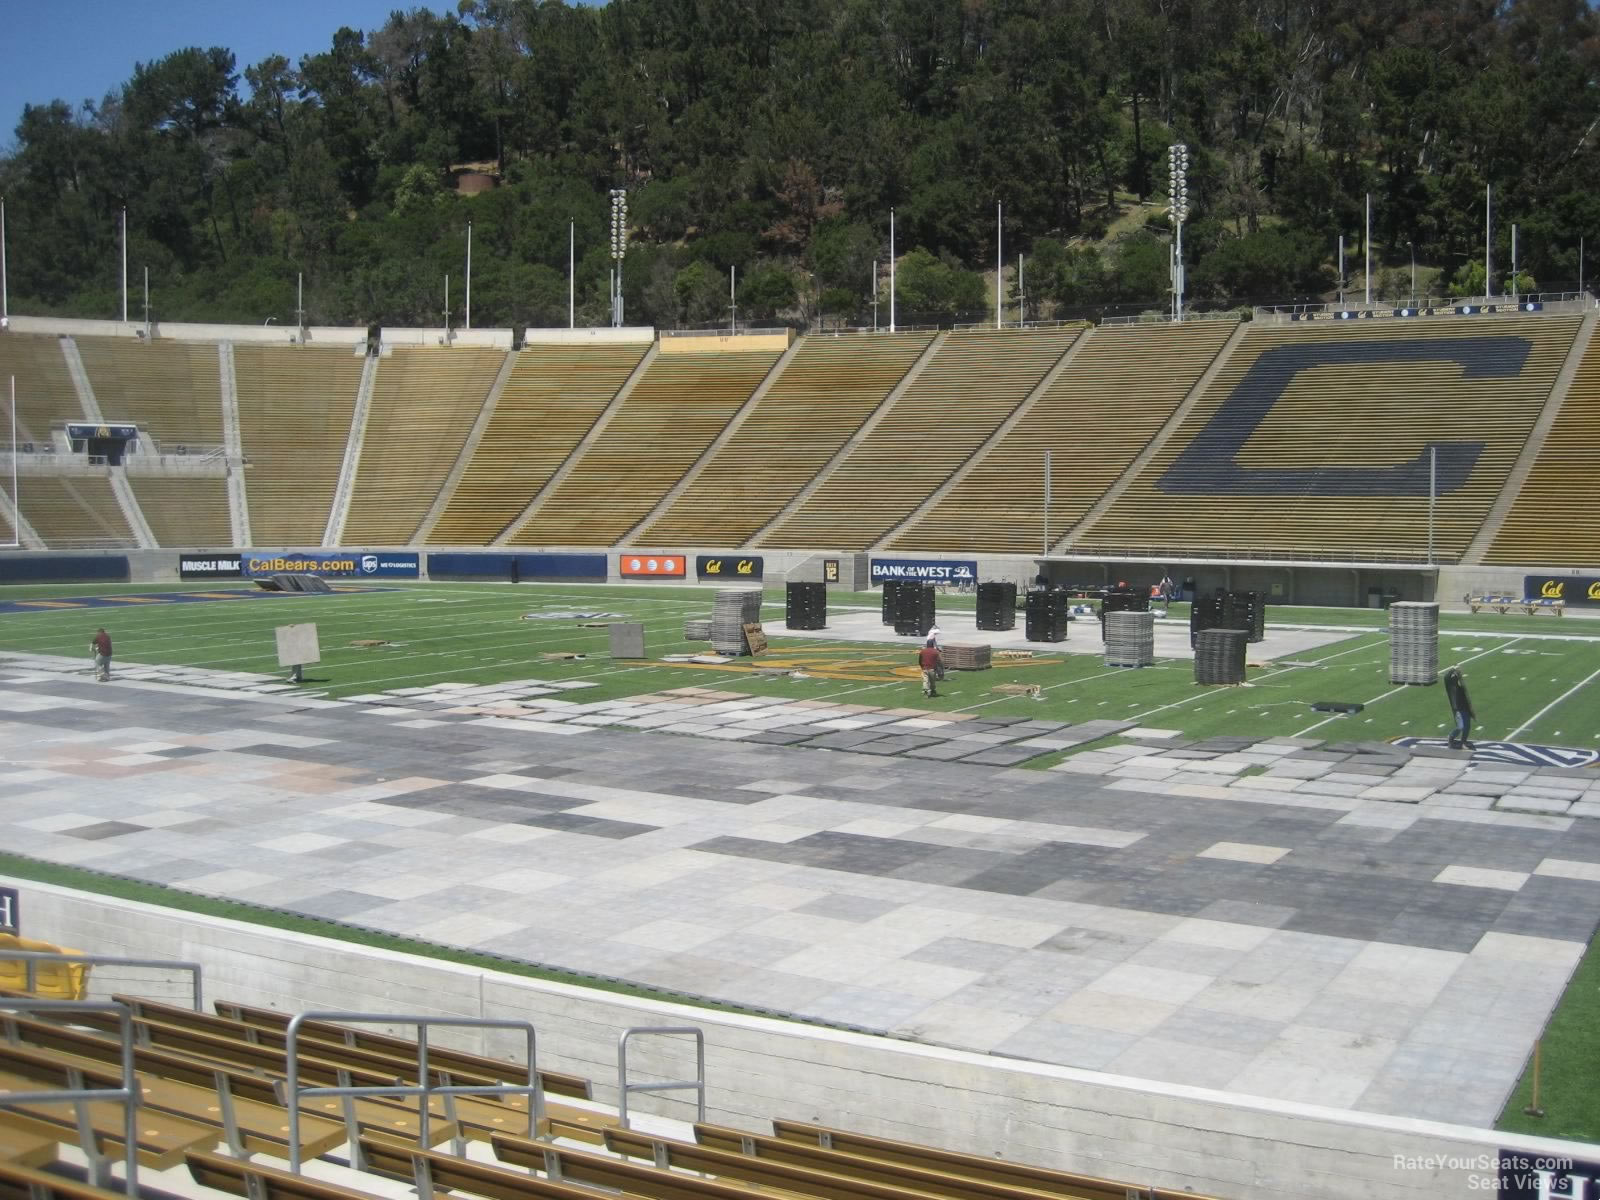 section hh, row 12 seat view  - memorial stadium (cal)